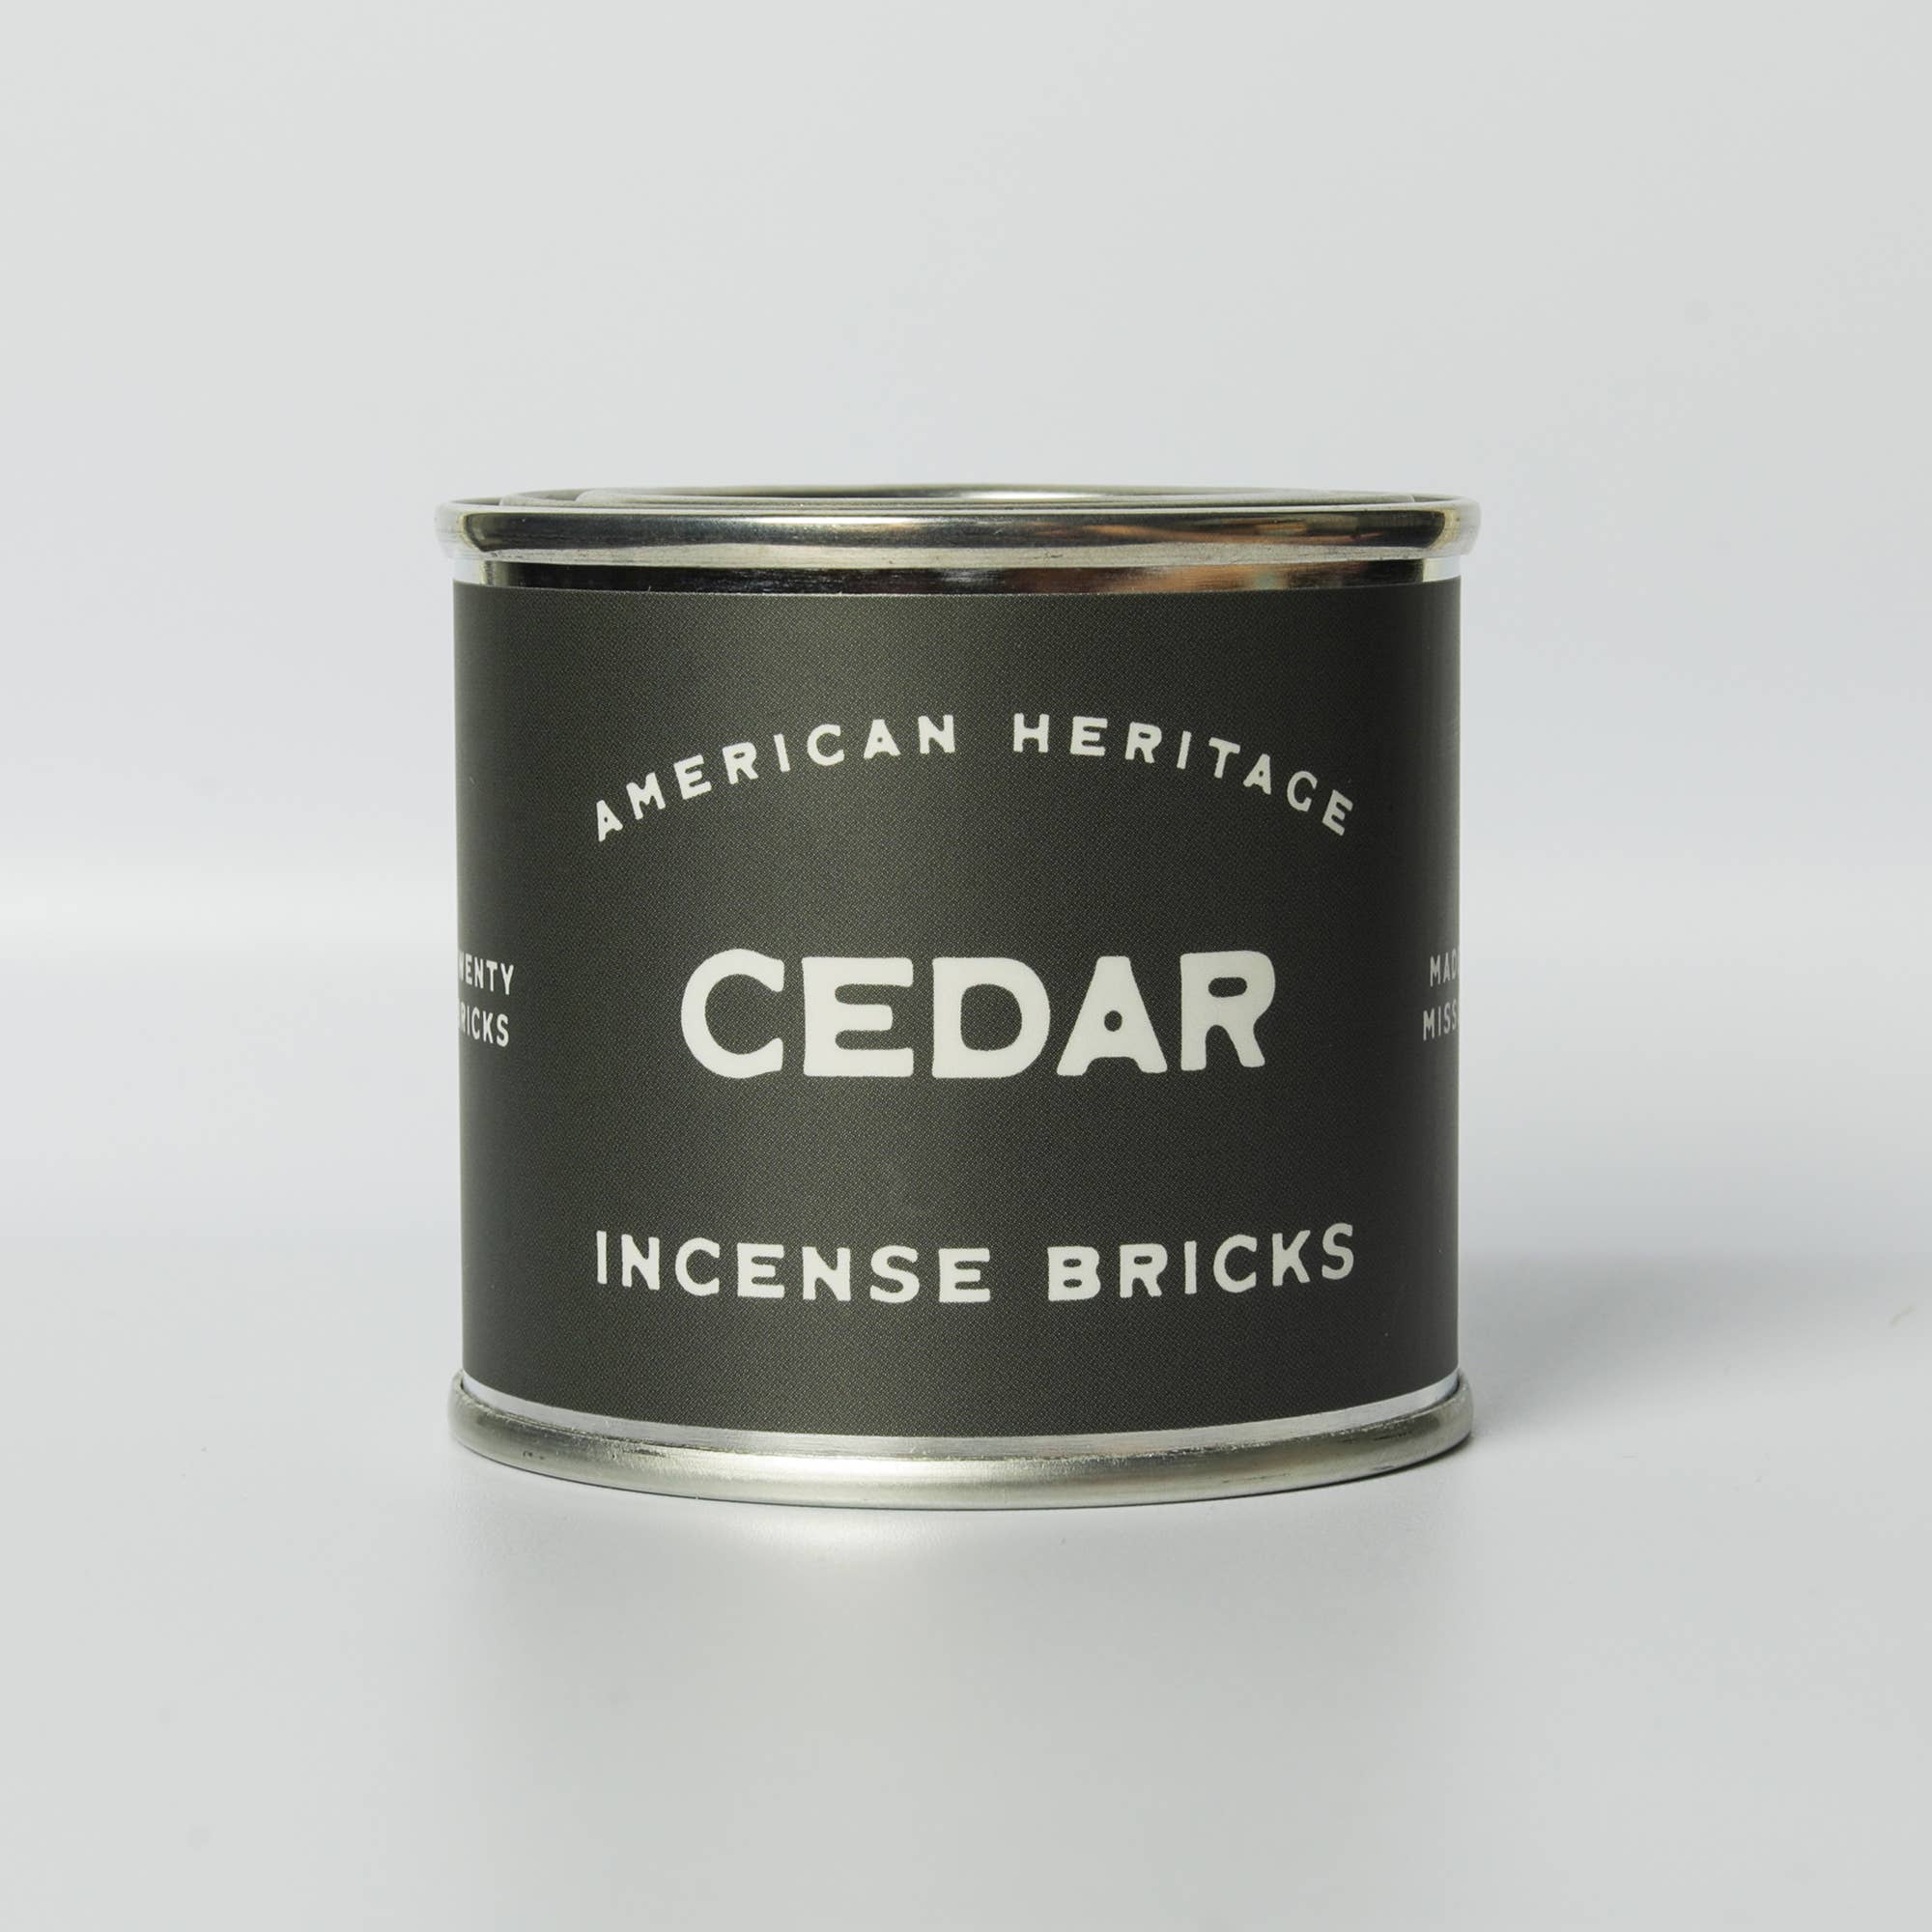 Incense Bricks by American Heritage